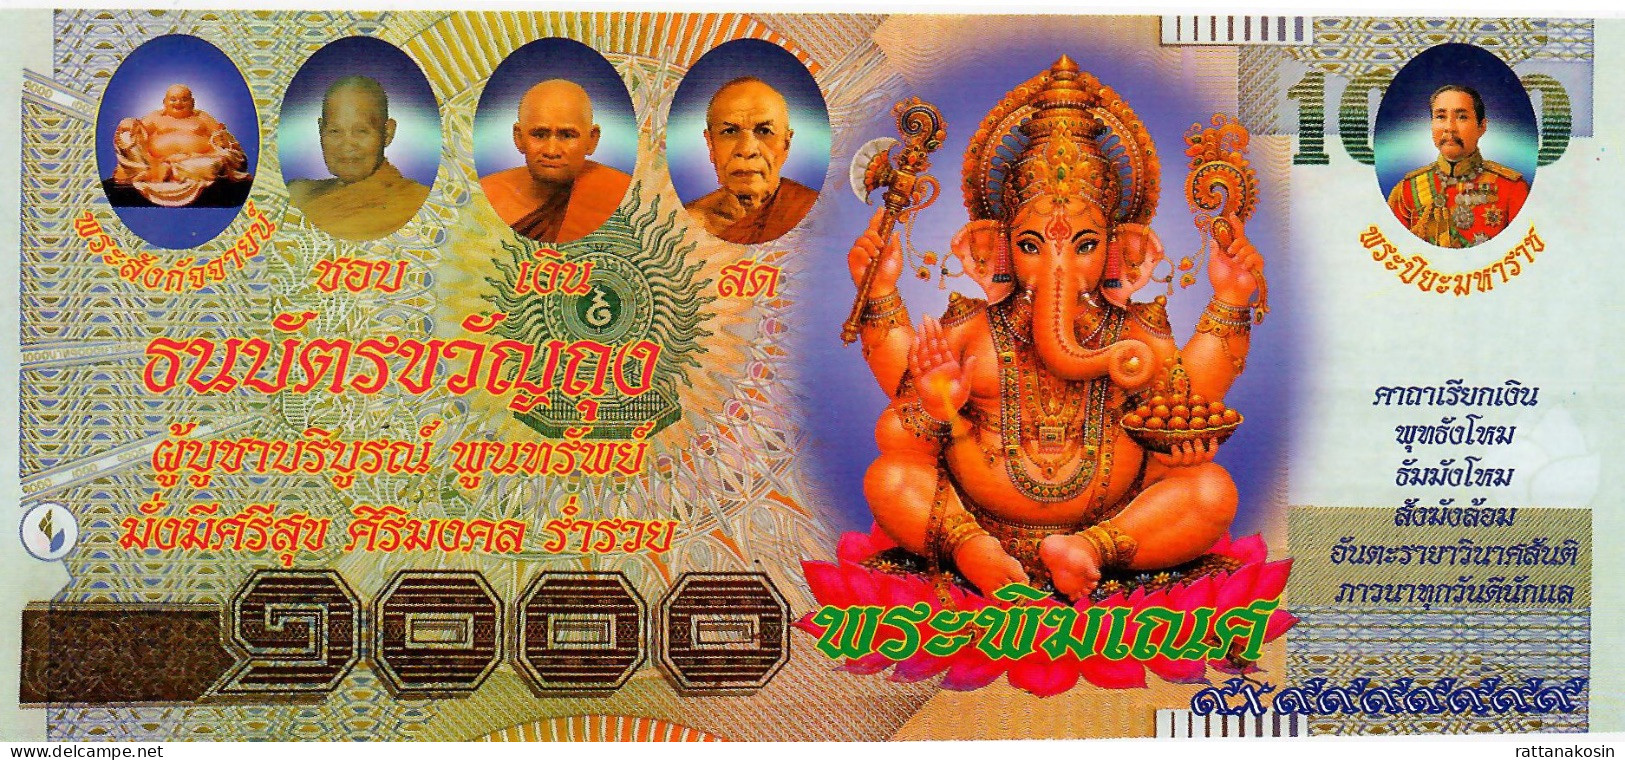 THAILAND TEMPLE BANKNOTE NLP 1000 BAHT  ND   UNC. - Tailandia